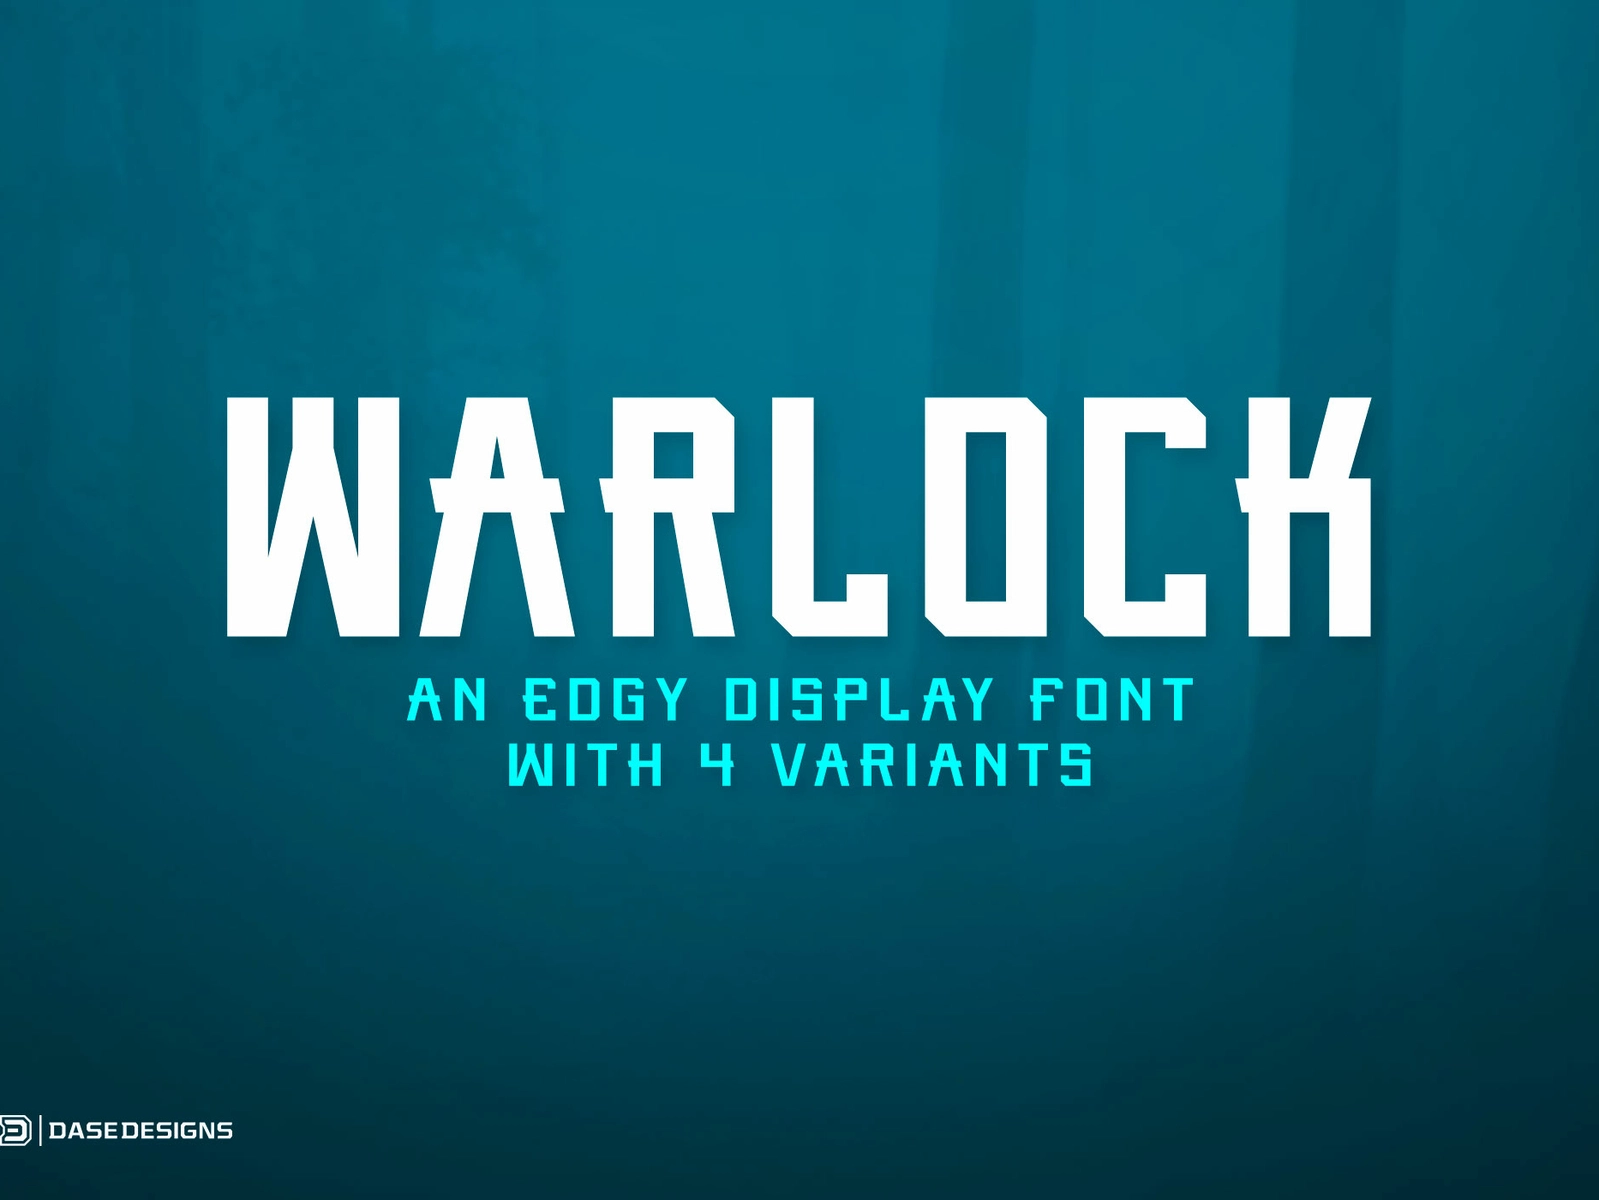 Warlock Font